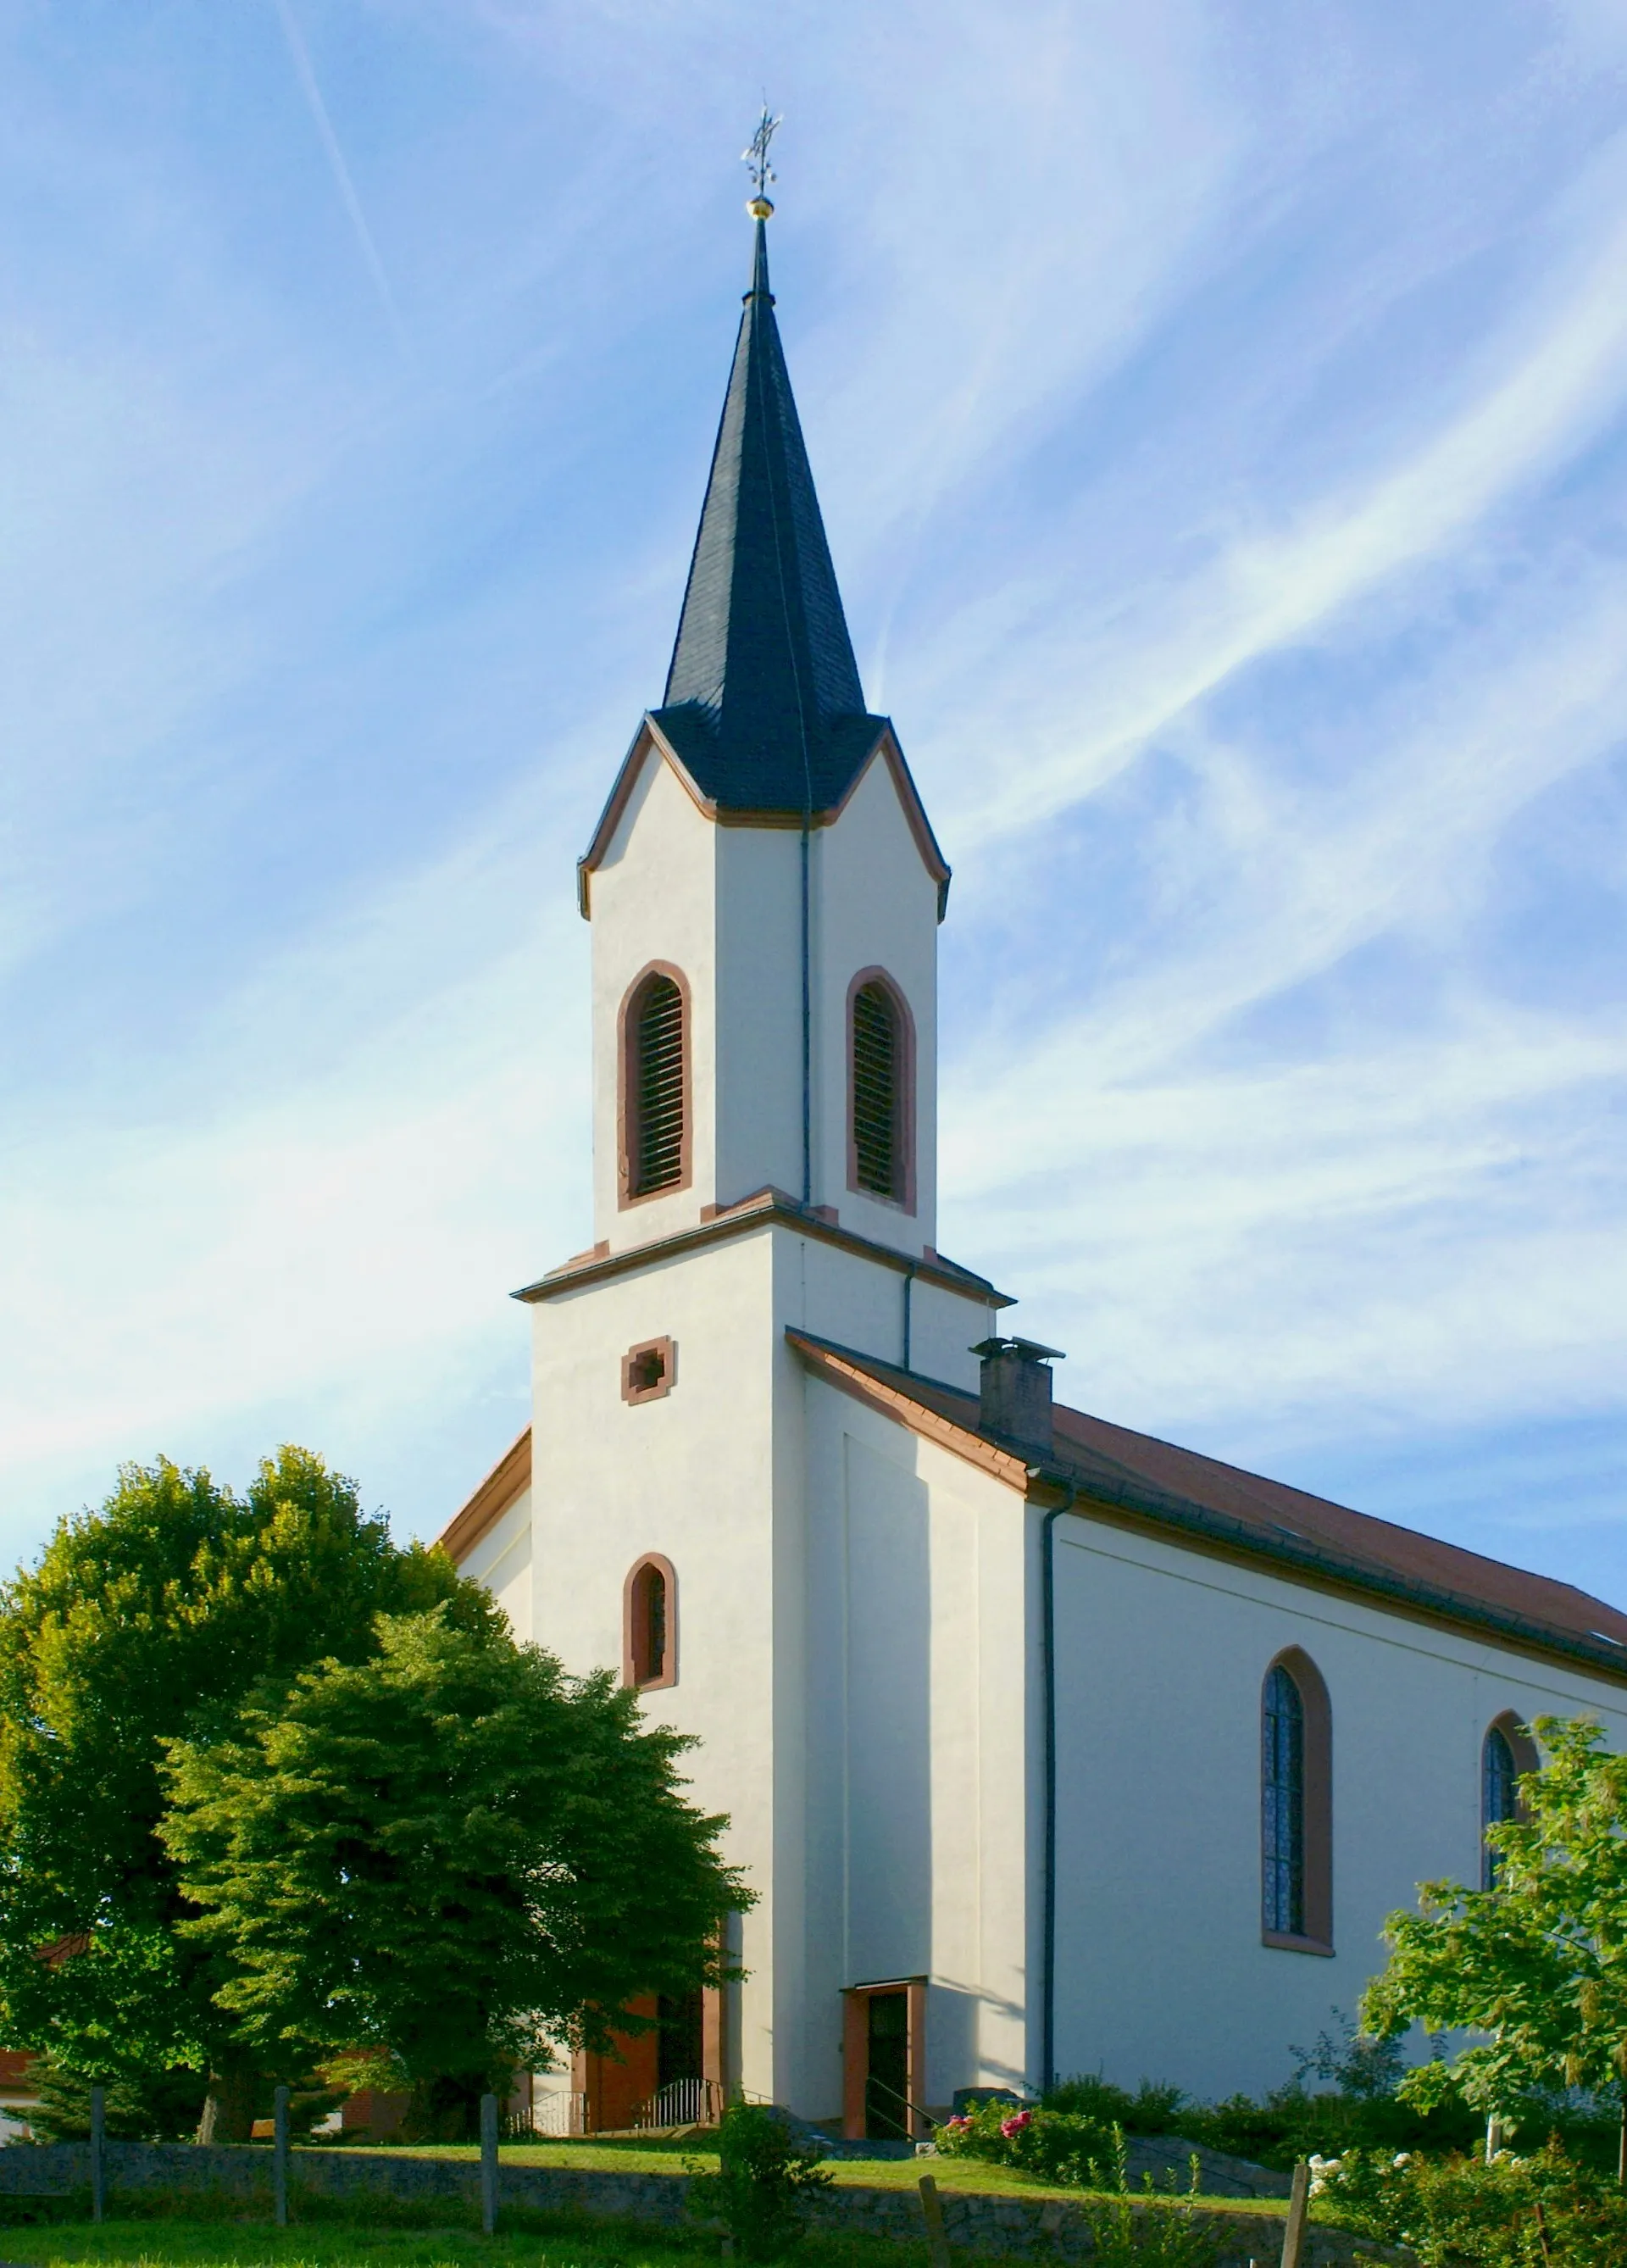 Photo showing: The parish church St. Wendelin of the community Königshofen on the River Kahl. The community belongs to Markt Mömbris